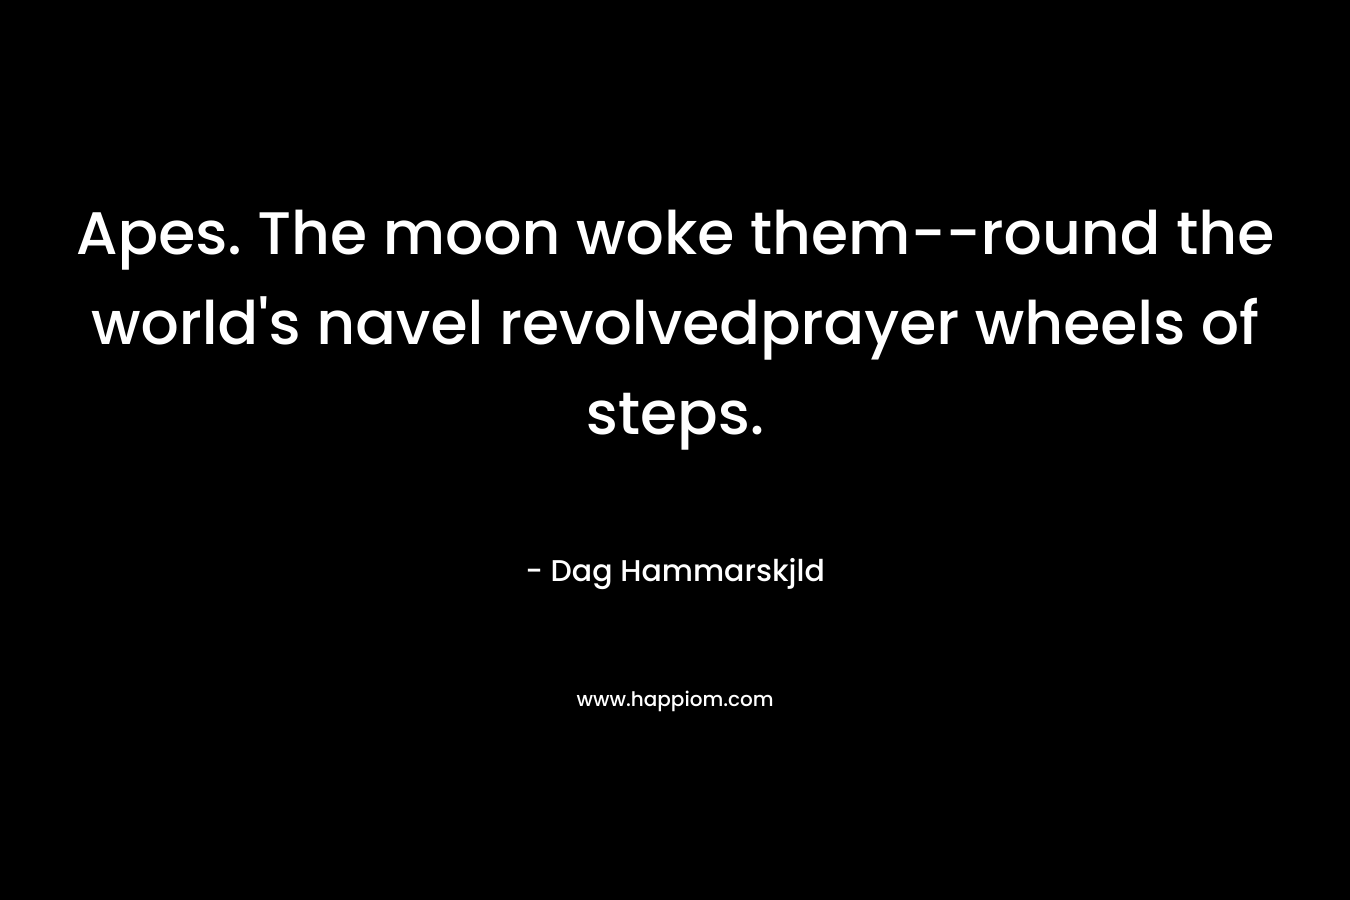 Apes. The moon woke them--round the world's navel revolvedprayer wheels of steps.